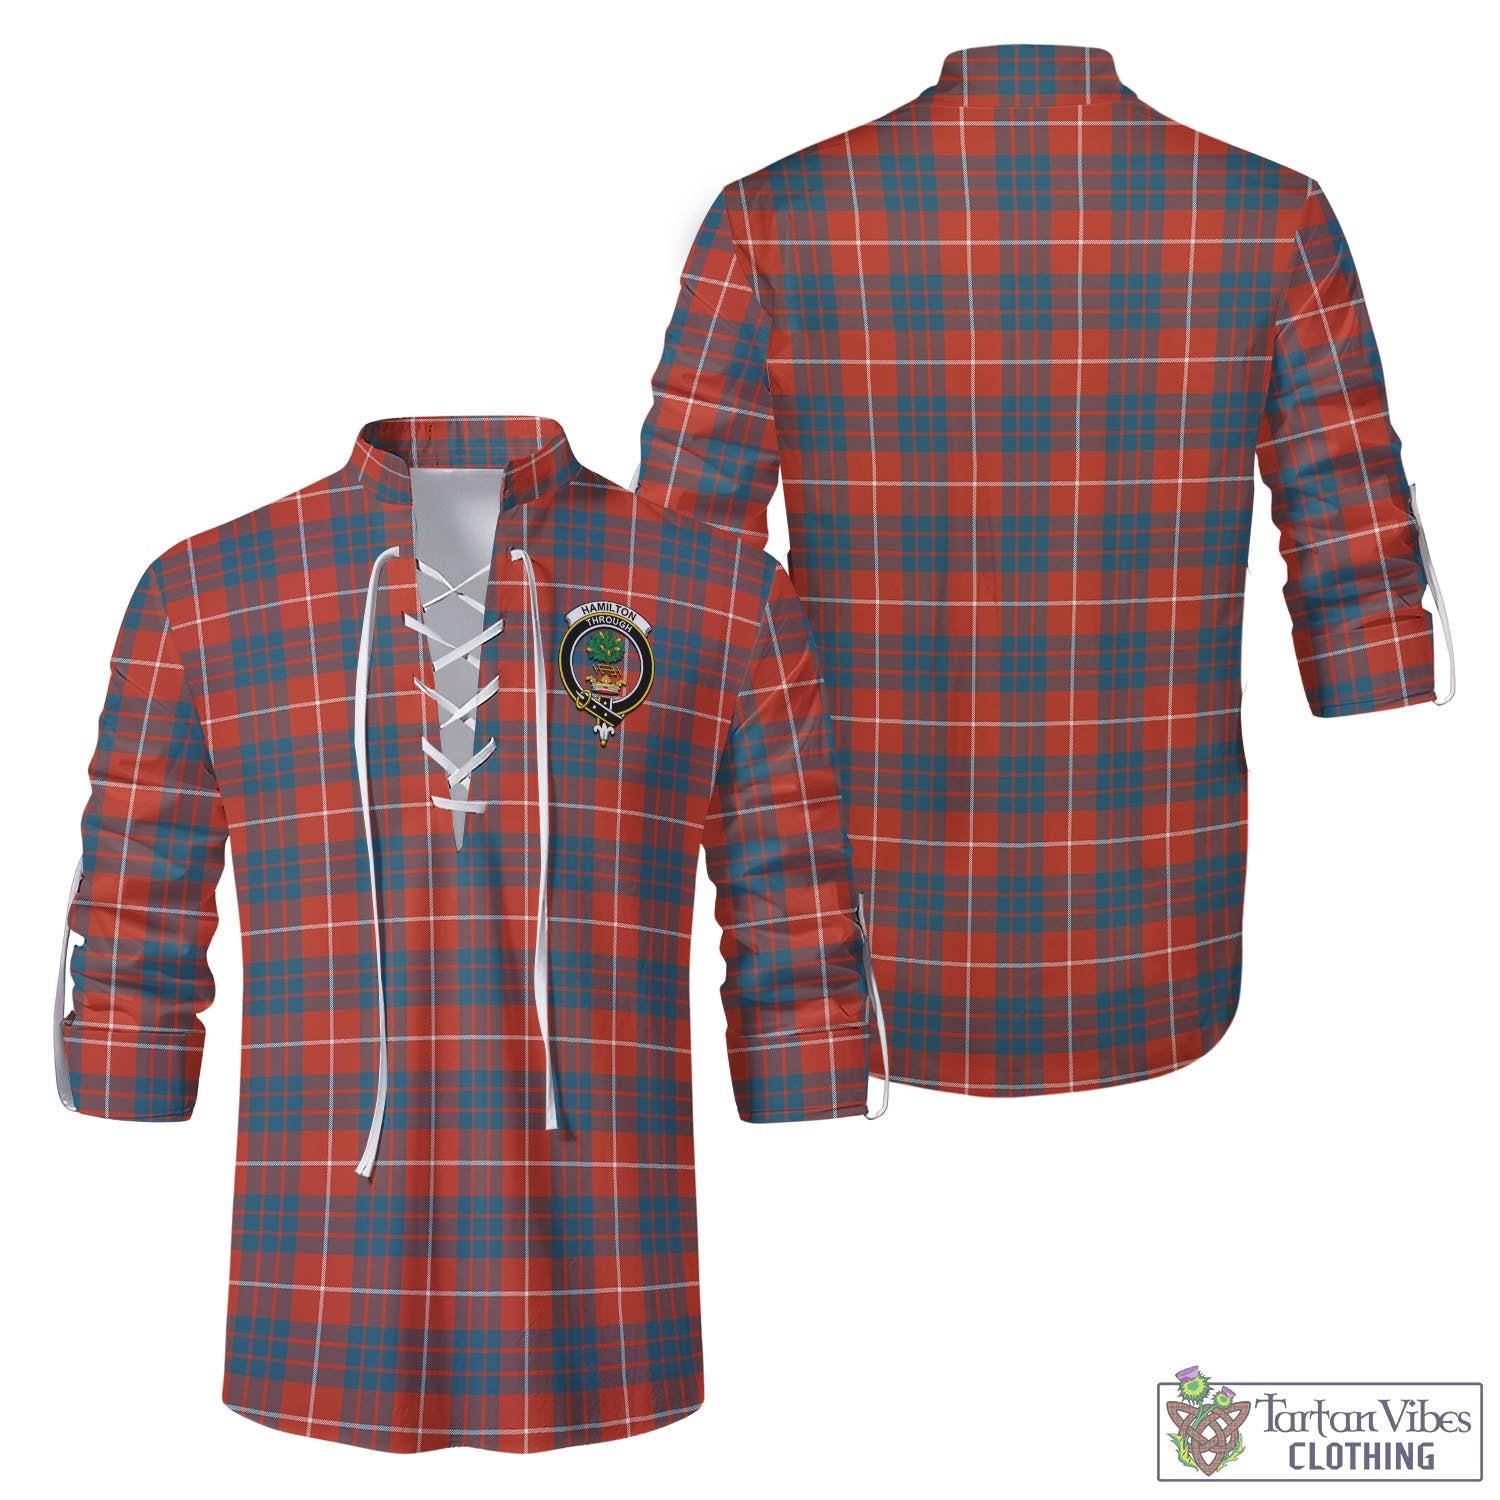 Tartan Vibes Clothing Hamilton Ancient Tartan Men's Scottish Traditional Jacobite Ghillie Kilt Shirt with Family Crest